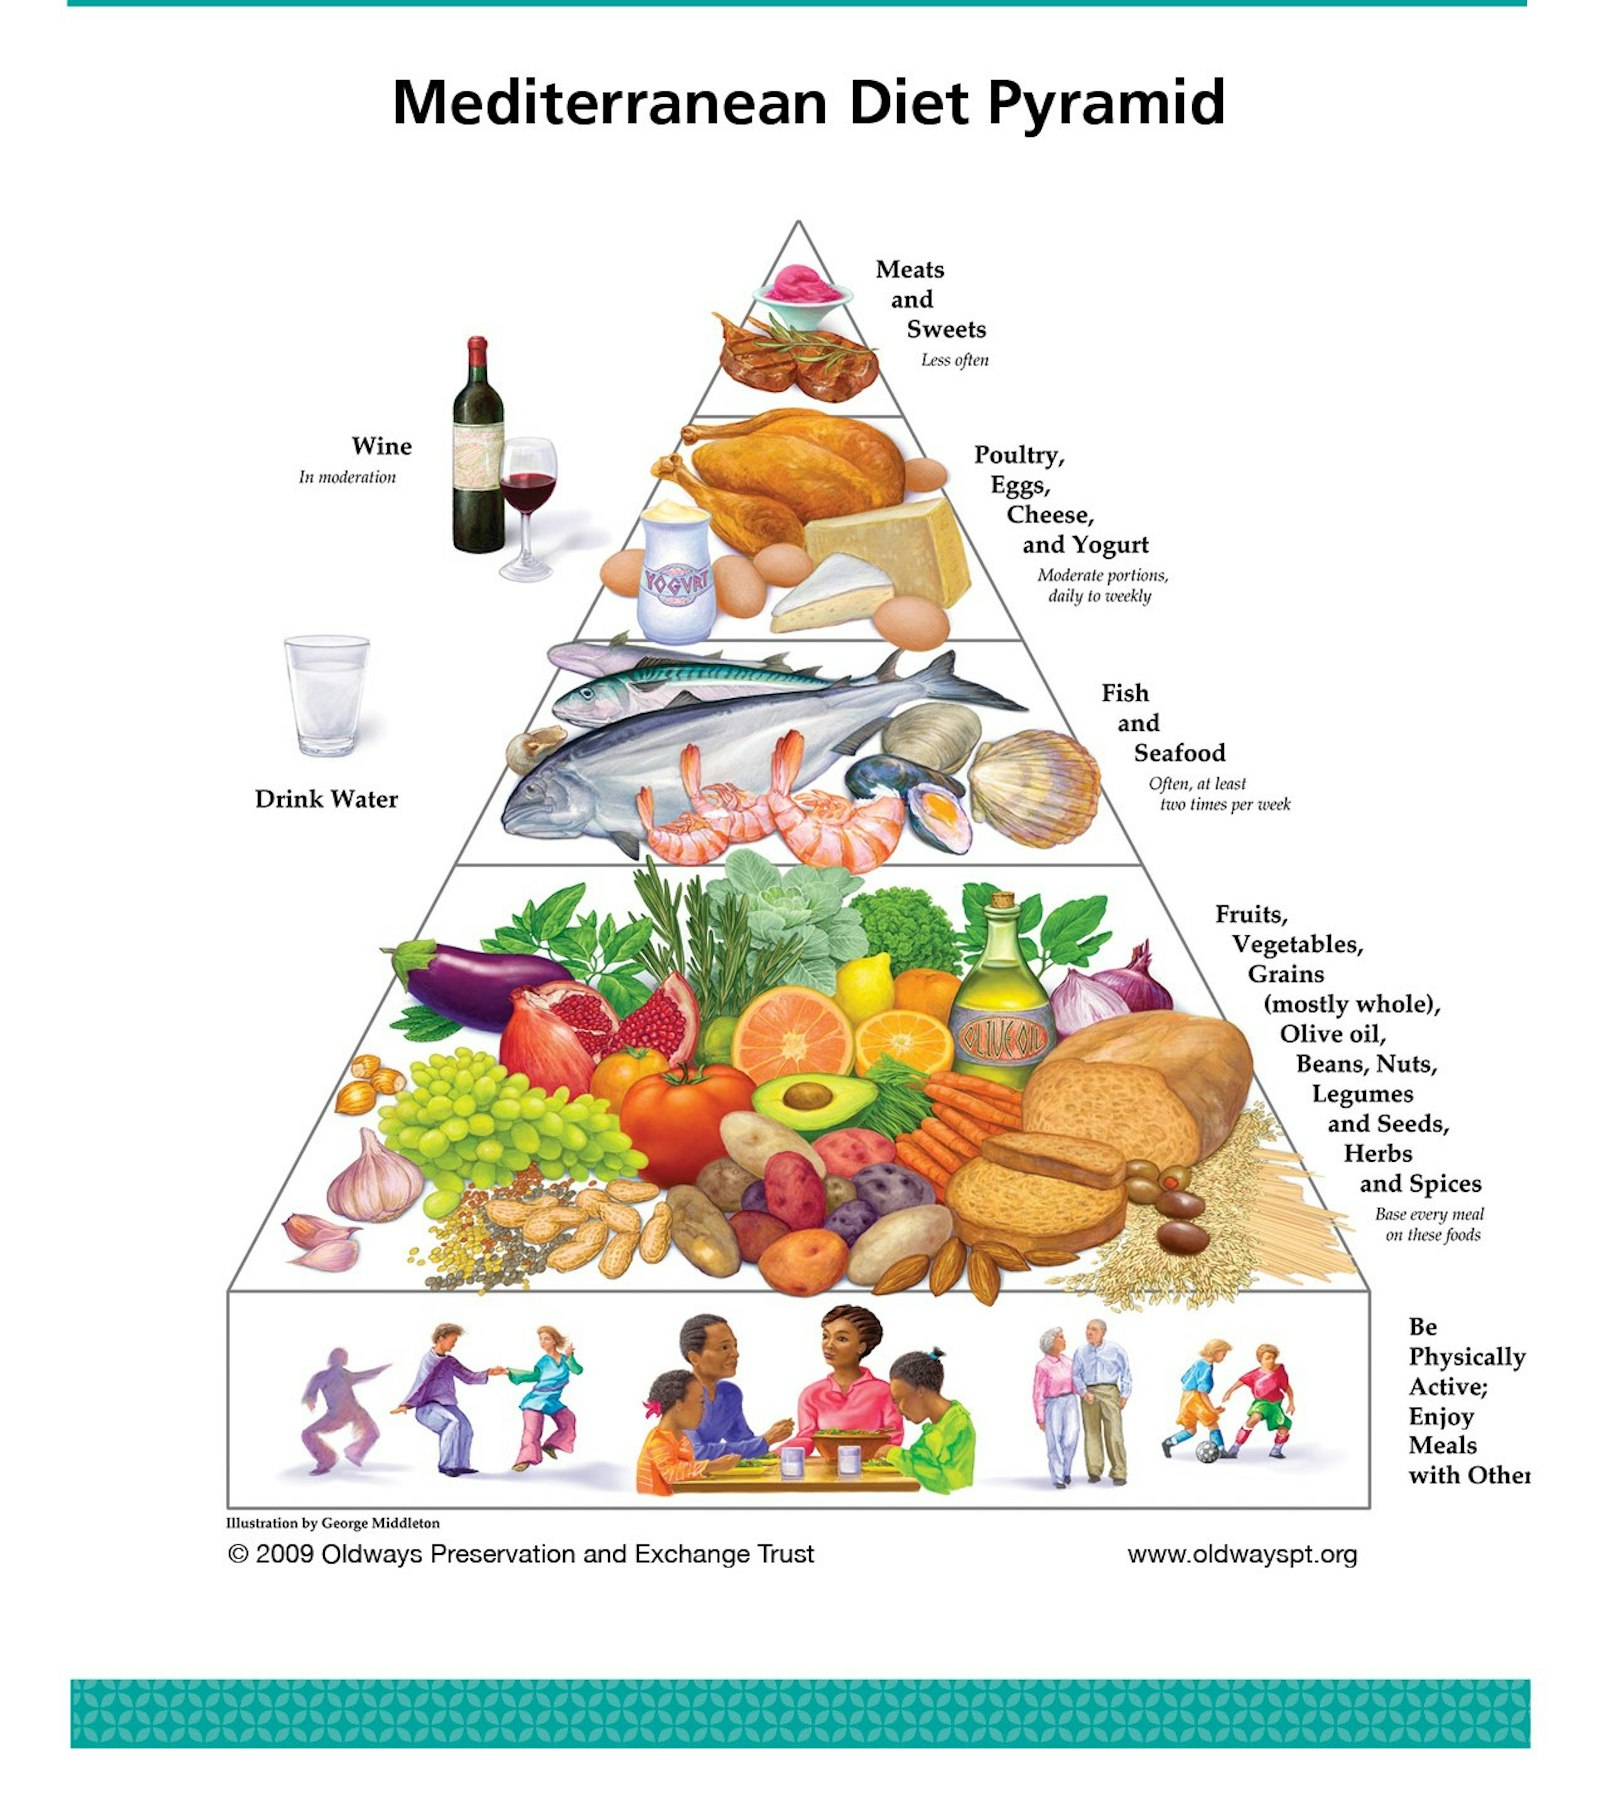 The Mediterranean Nutritional Plan